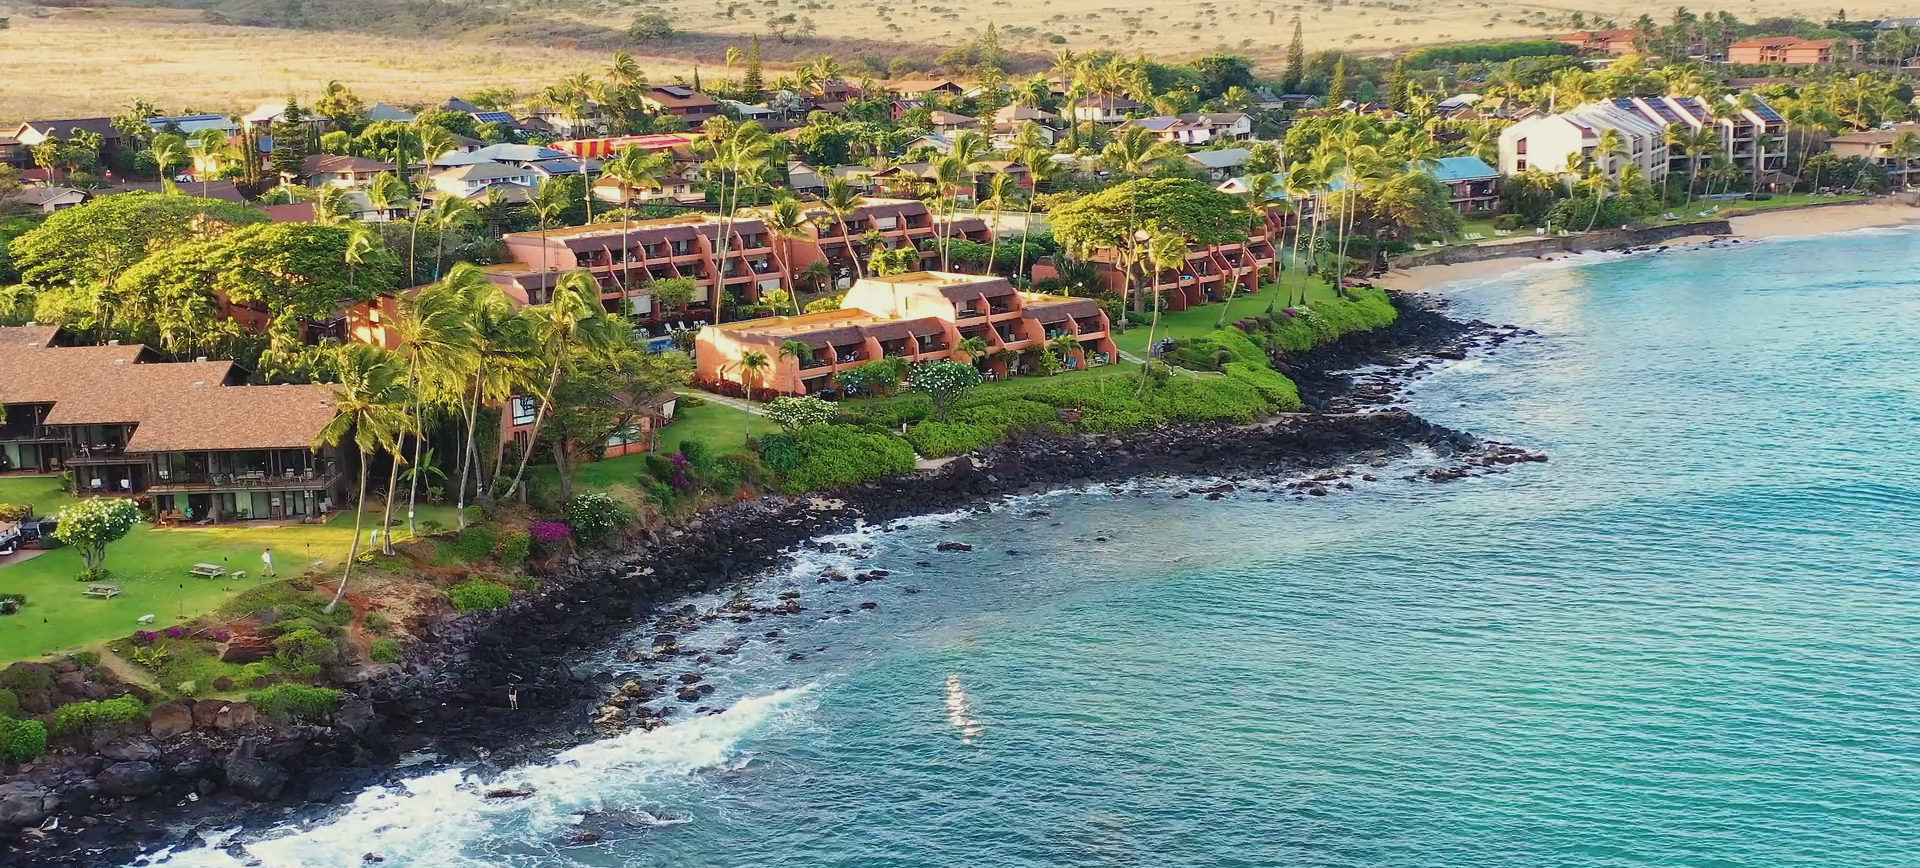 Aerial View of the Kuleana Club Maui Resort